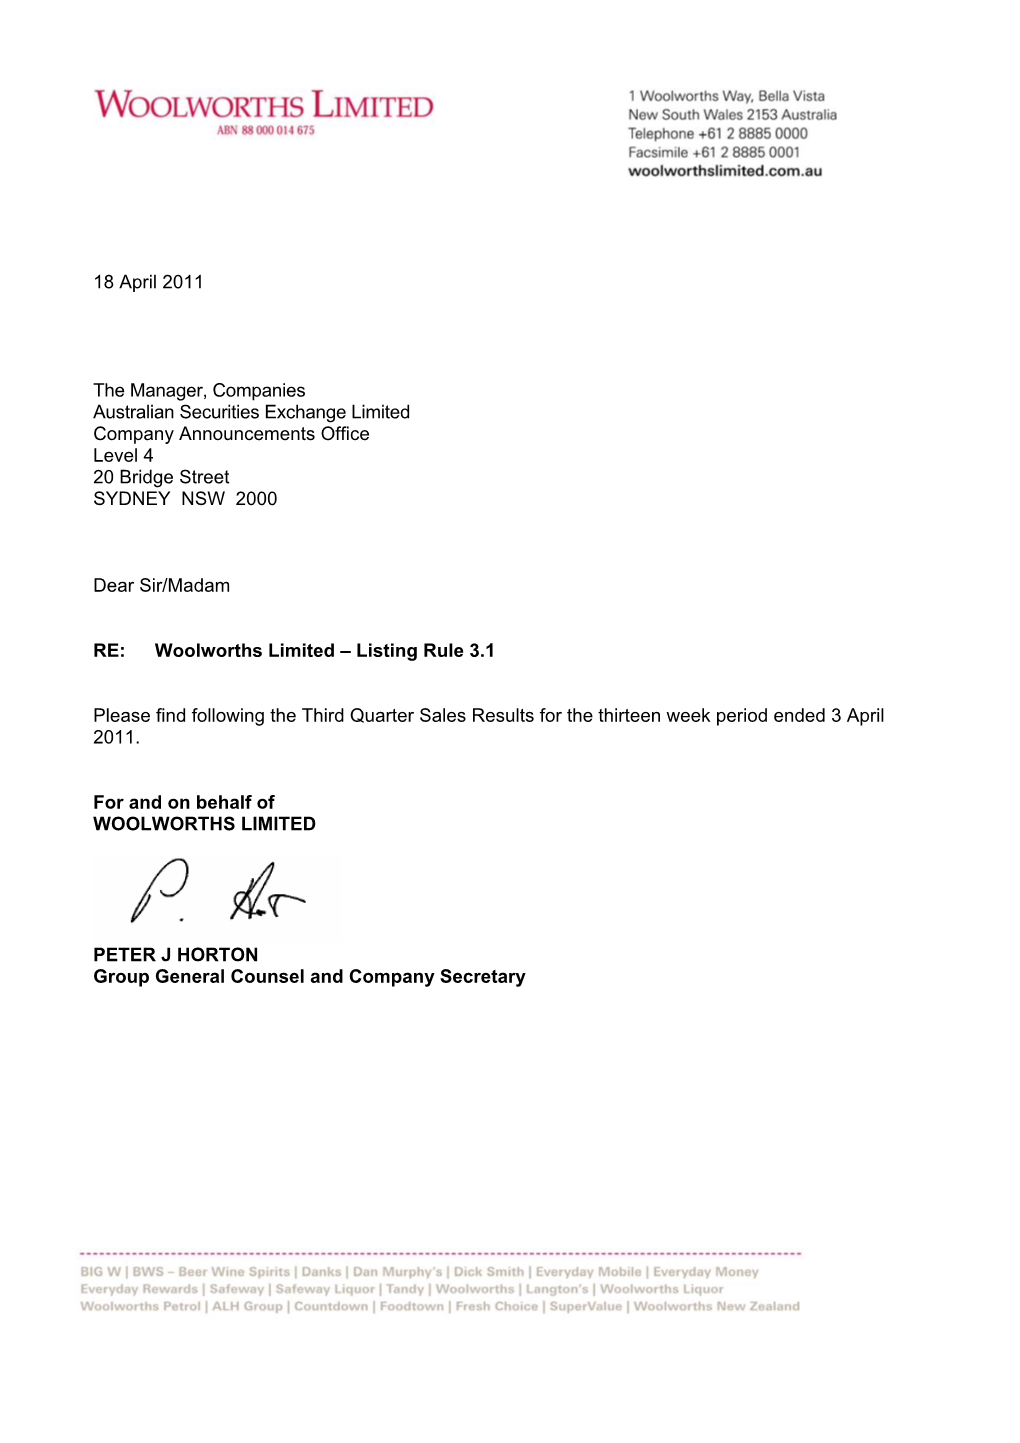 18 April 2011 the Manager, Companies Australian Securities Exchange Limited Company Announcements Office Level 4 20 Bridge Stre